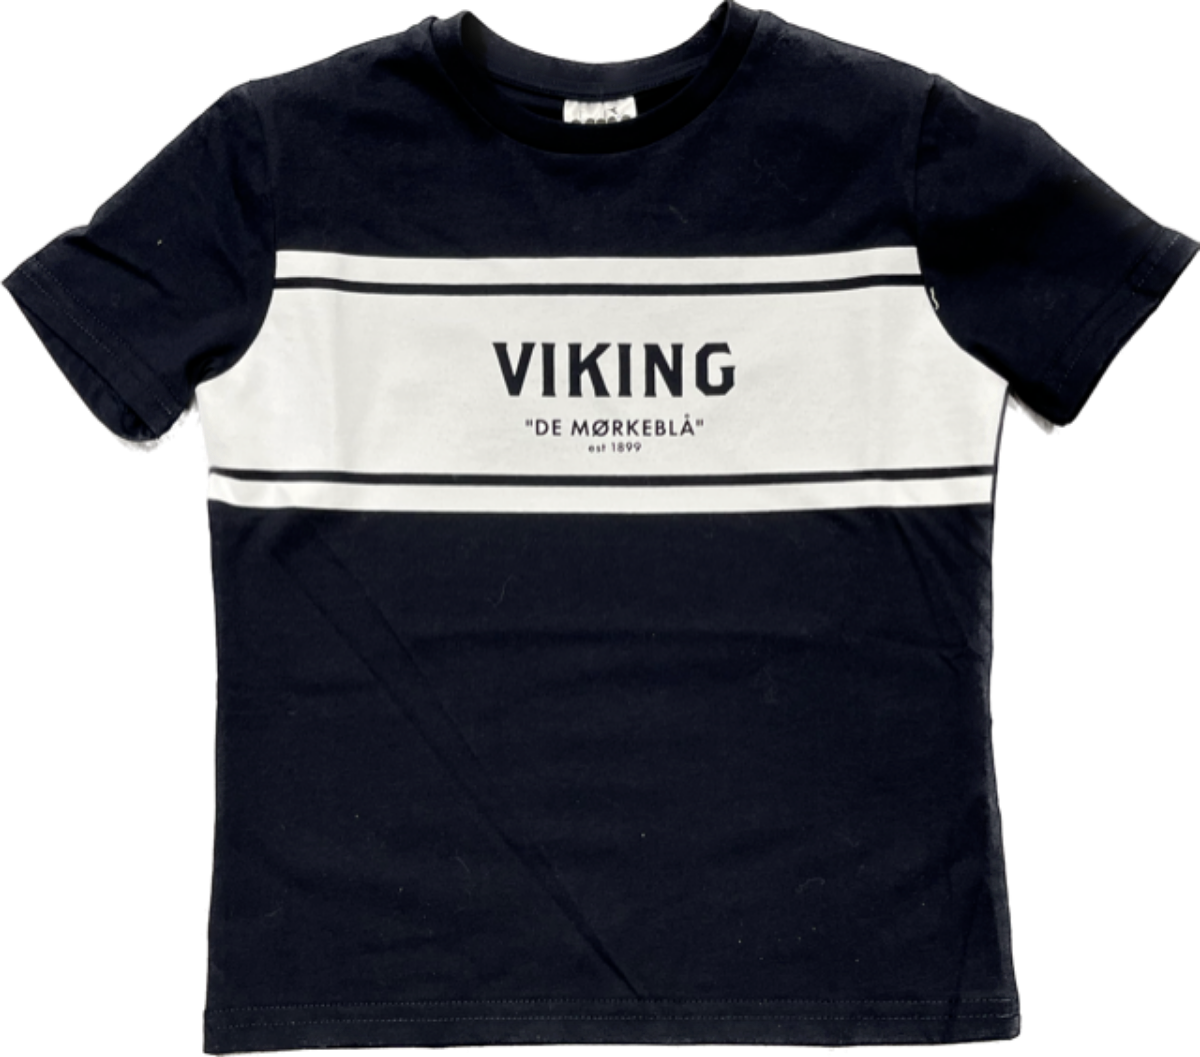 diadora-viking-t-skjorte-mørkeblåe-marine